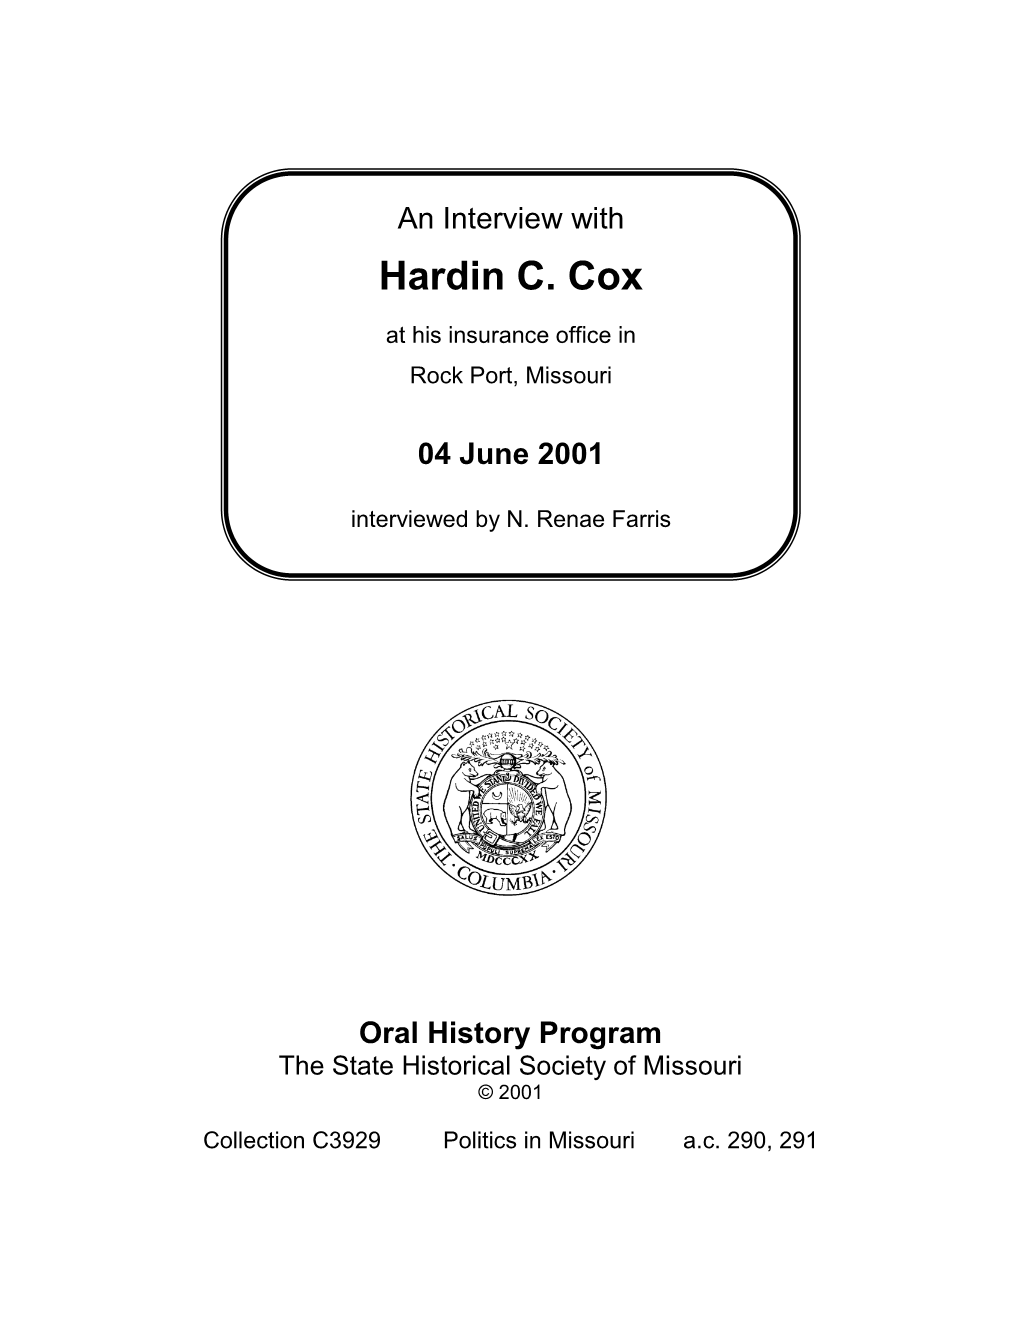 Hardin C. Cox